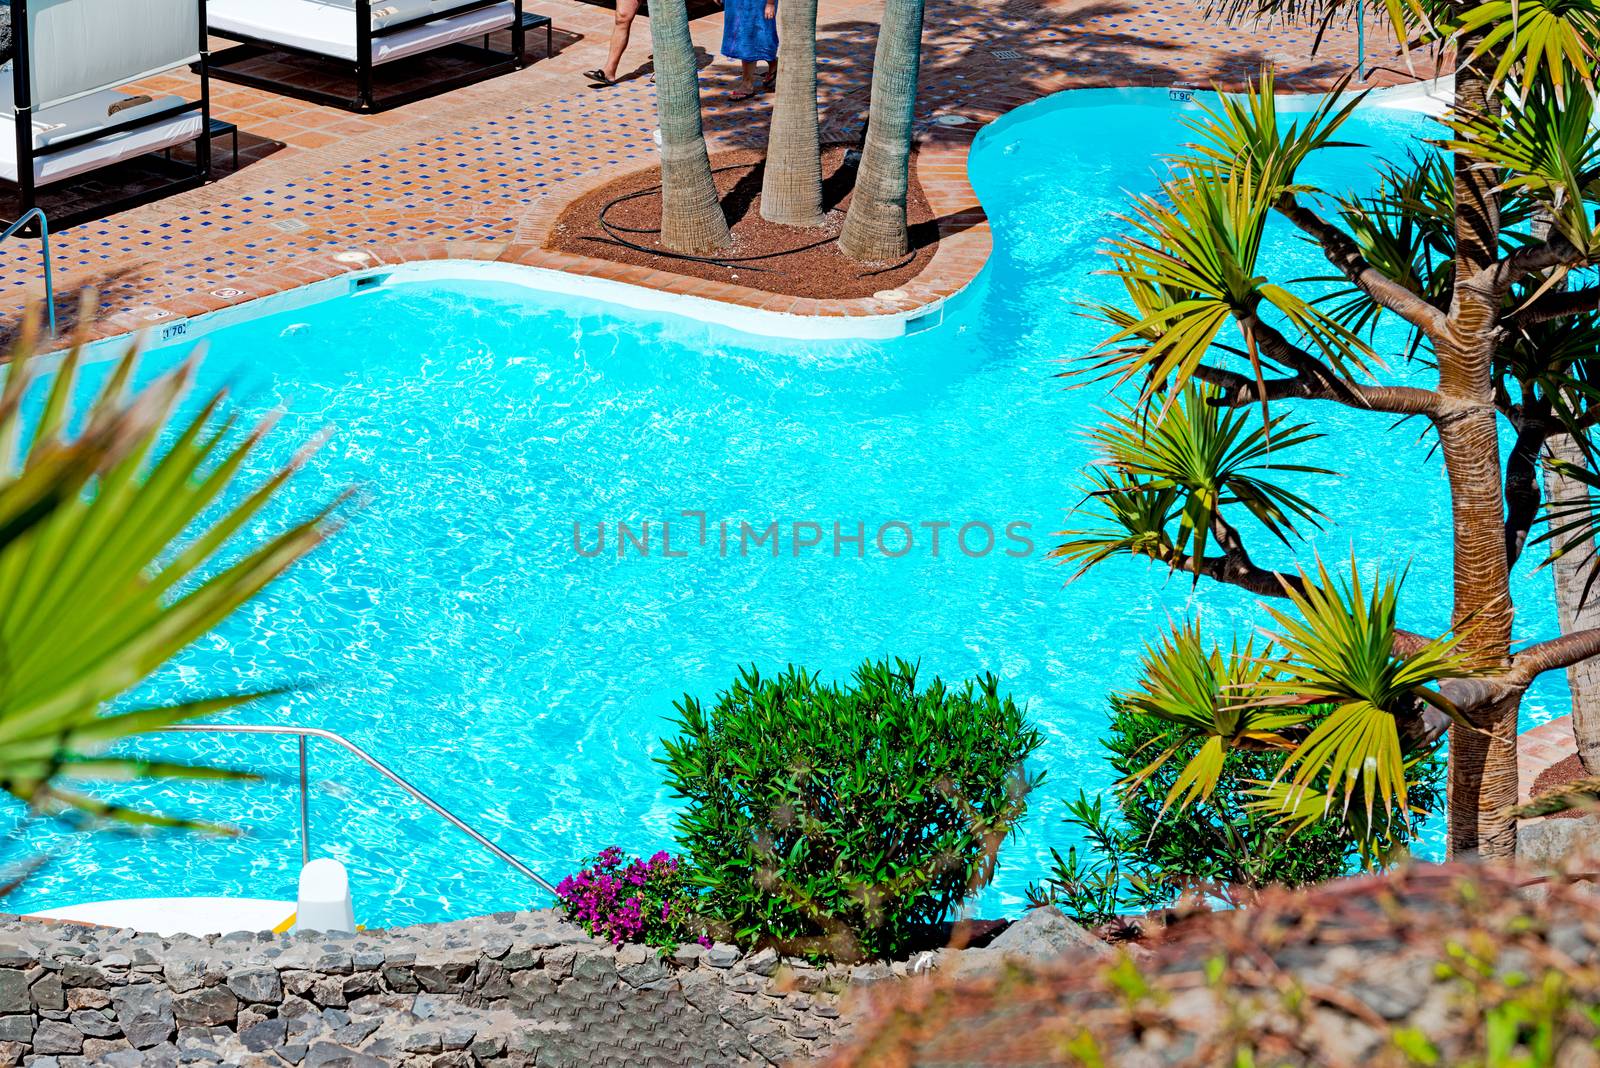 Swimming pool at resort on Tenerife Island by Nanisimova